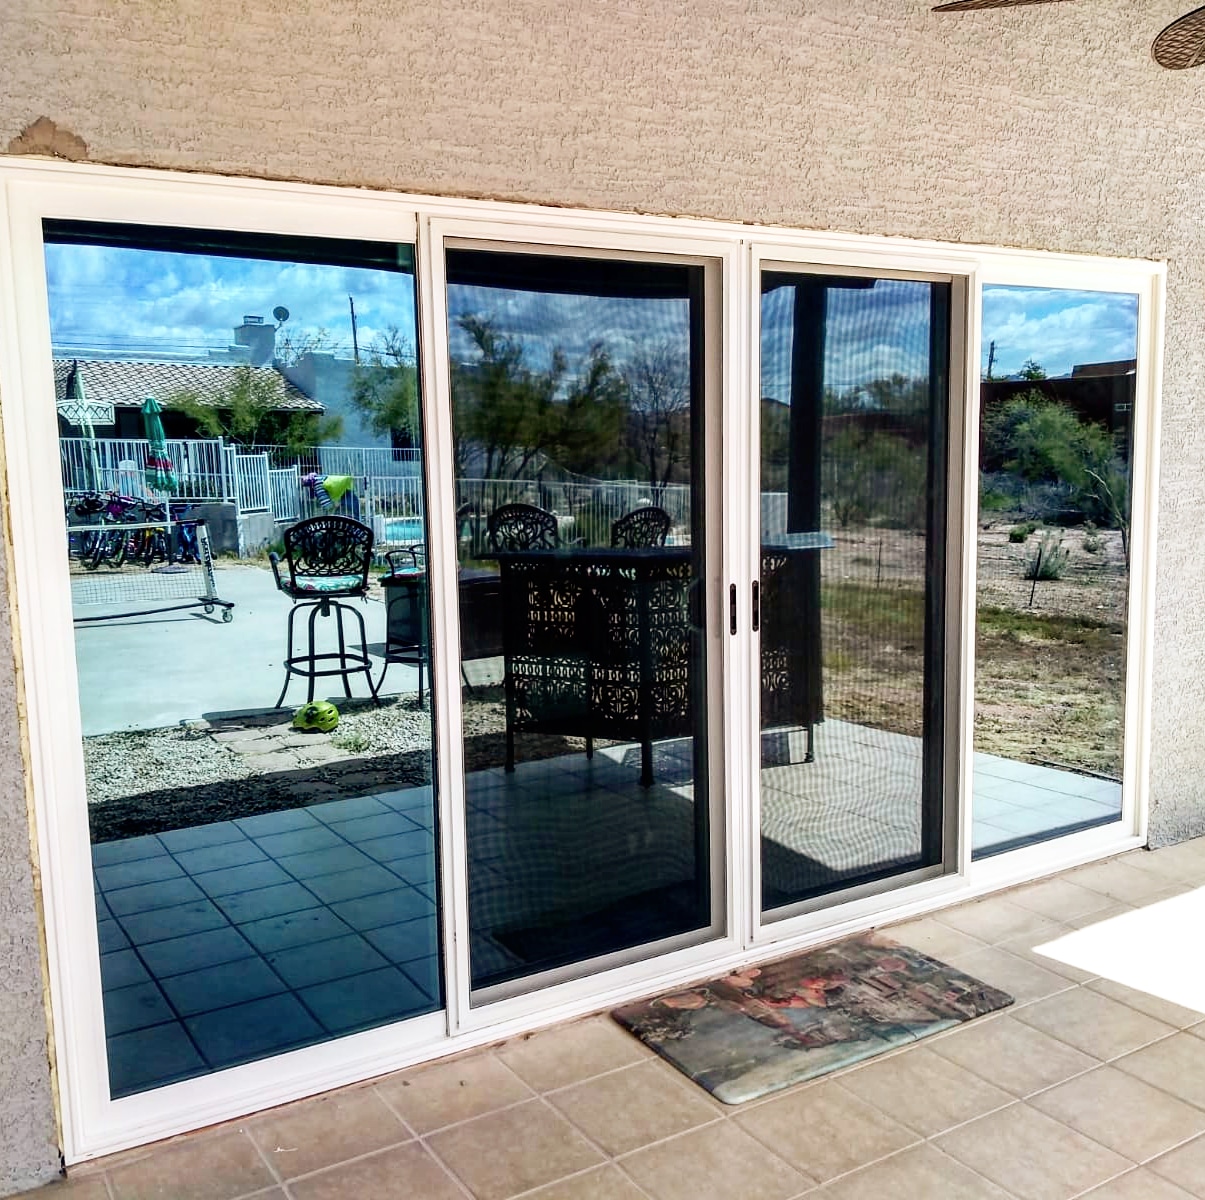 Arizona Window and Door in Scottsdale and Tucson showing patio french doors